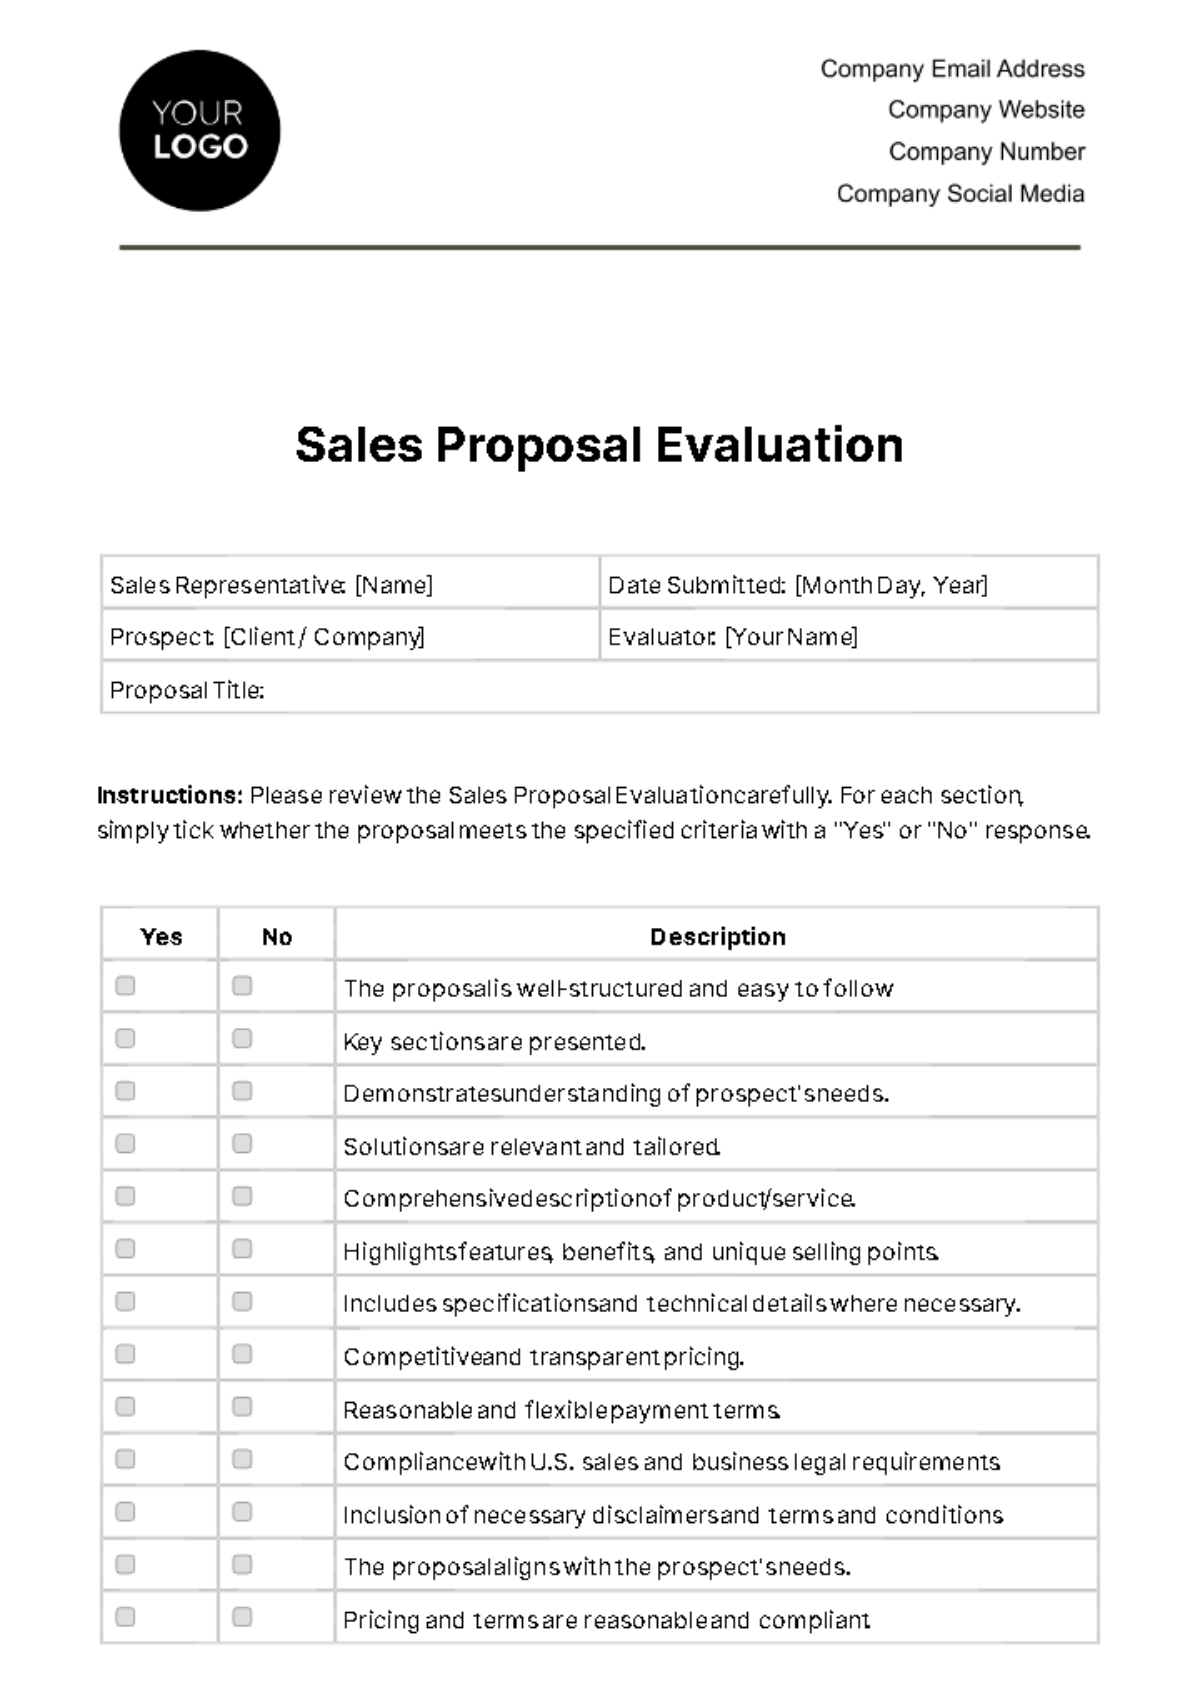 Sales Proposal Evaluation Template